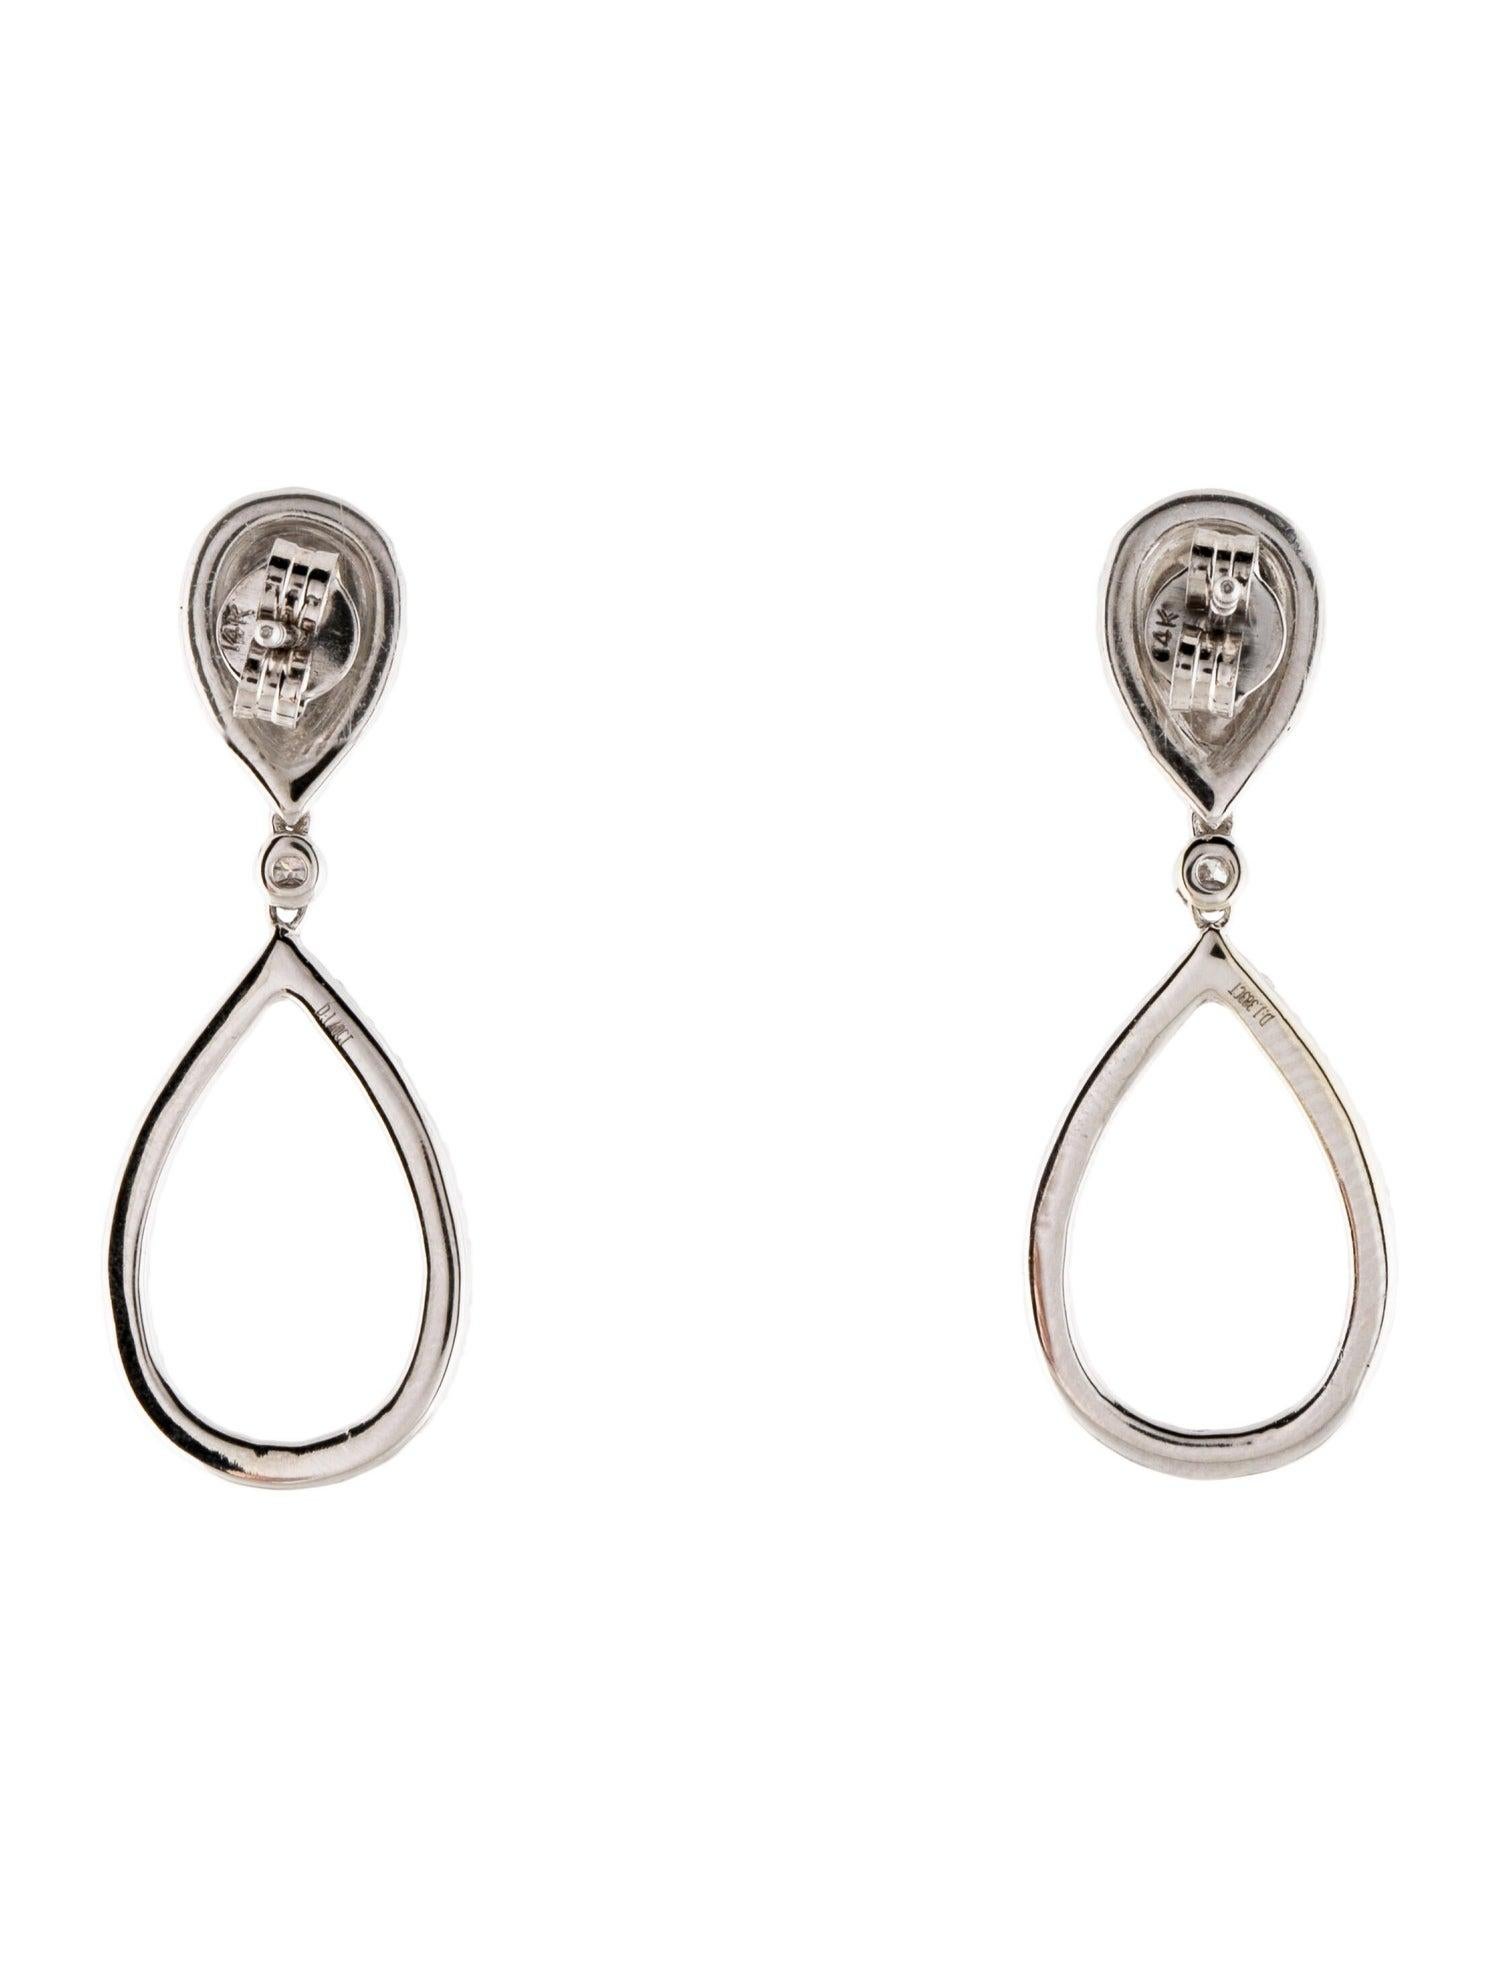 Brilliant Cut Exquisite 14K Diamond Drop Earrings - 1.40ctw Radiant Beauty & Luxury For Sale